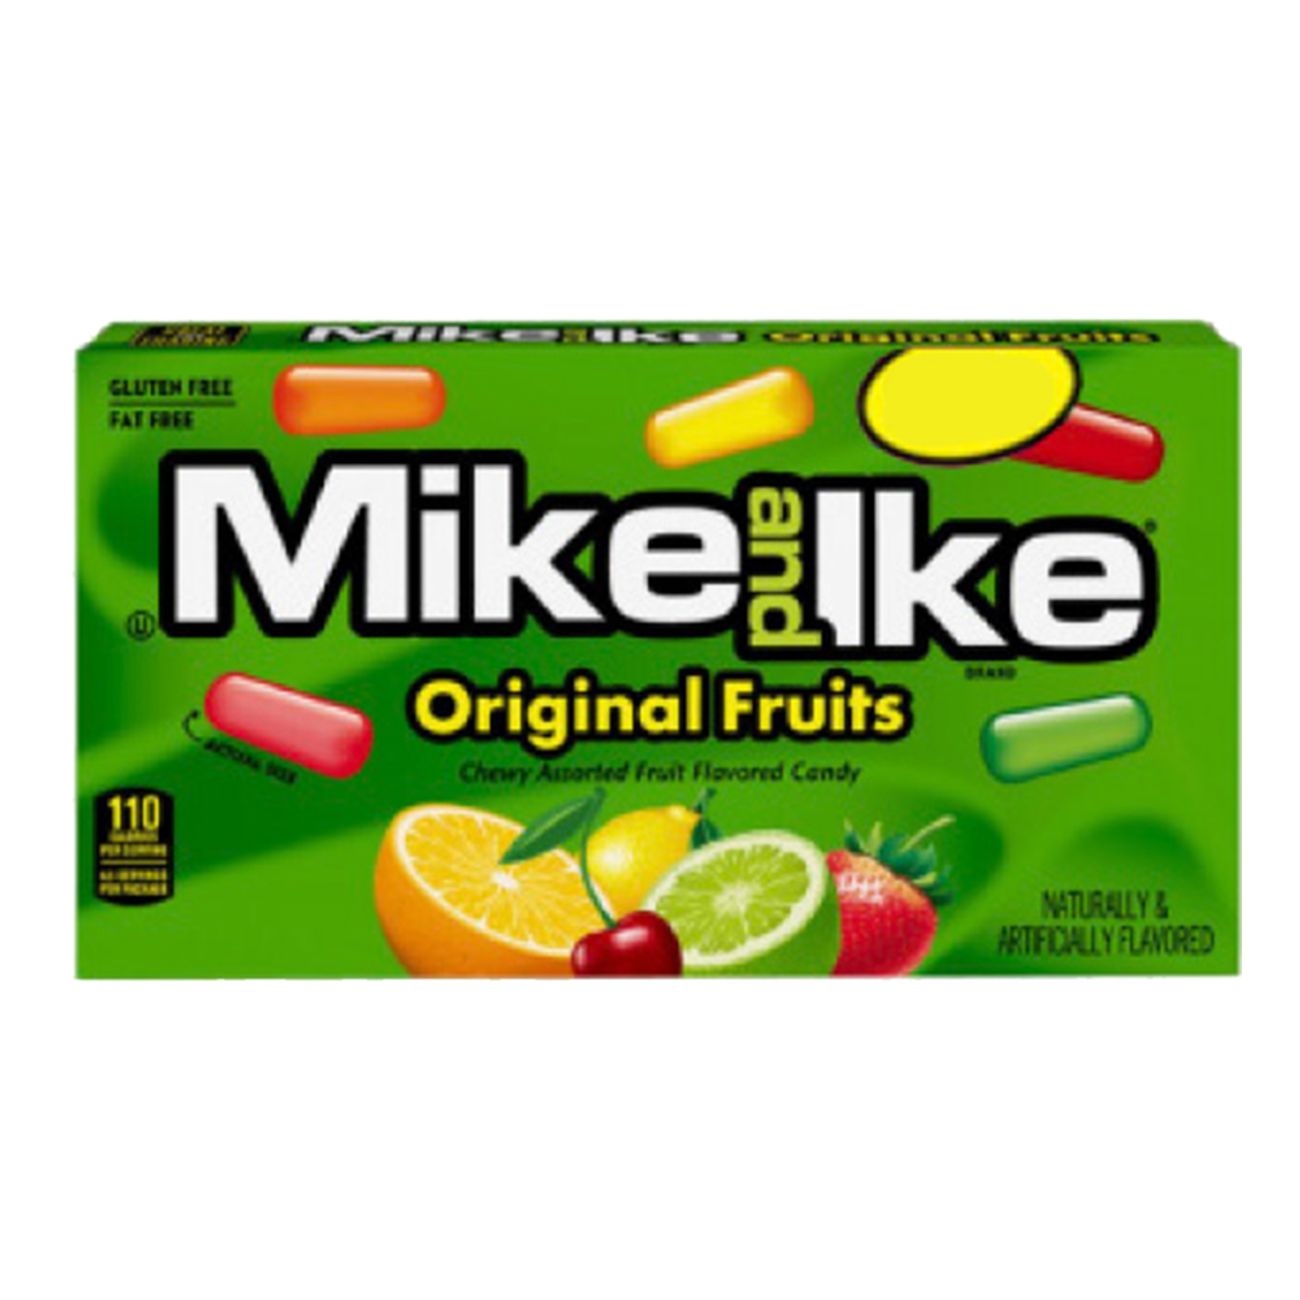 mike-ike-original-fruits-99902-1